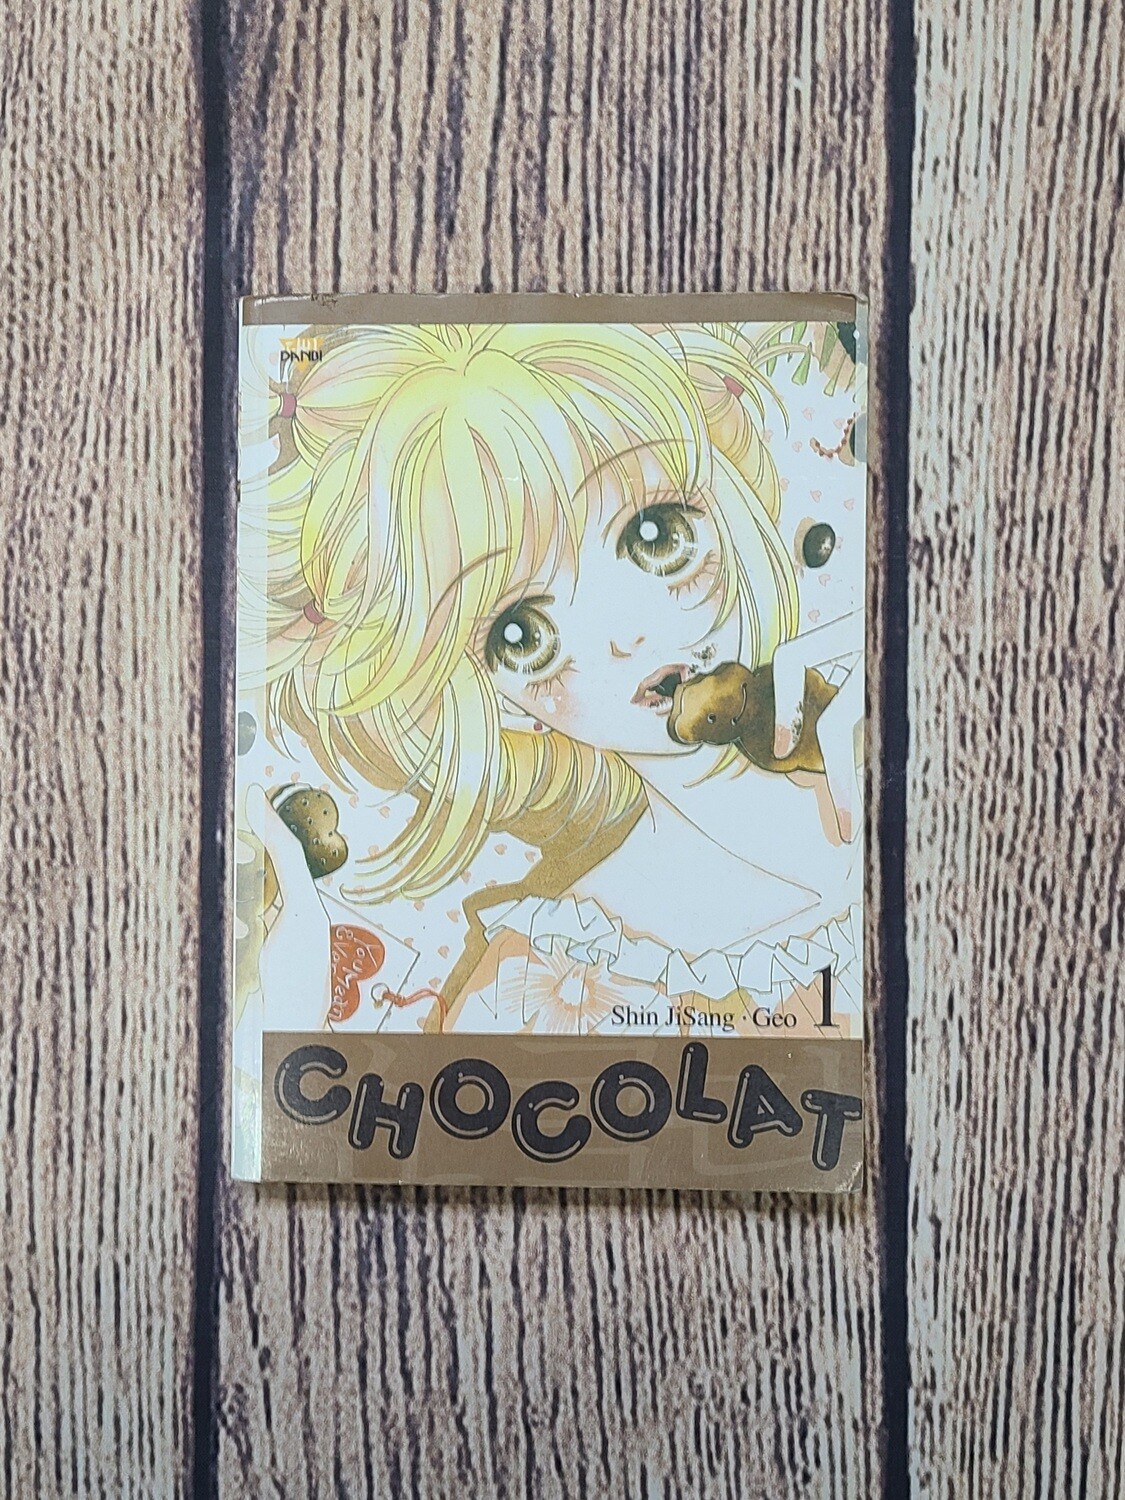 Chocolat by Shin JiSang